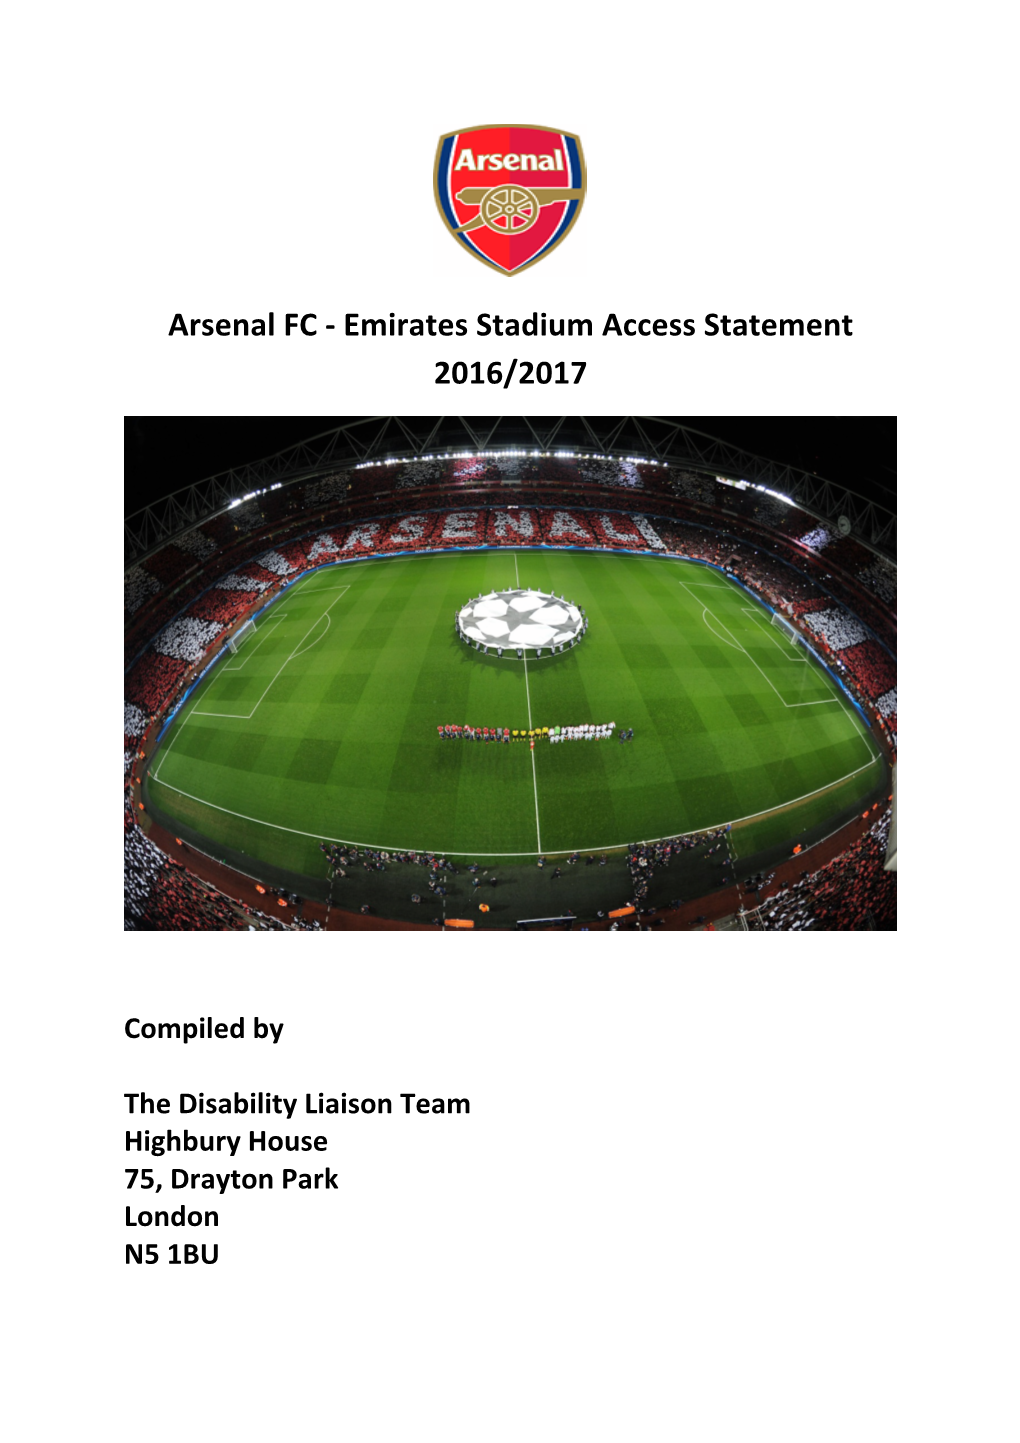 Arsenal FC - Emirates Stadium Access Statement 2016/2017